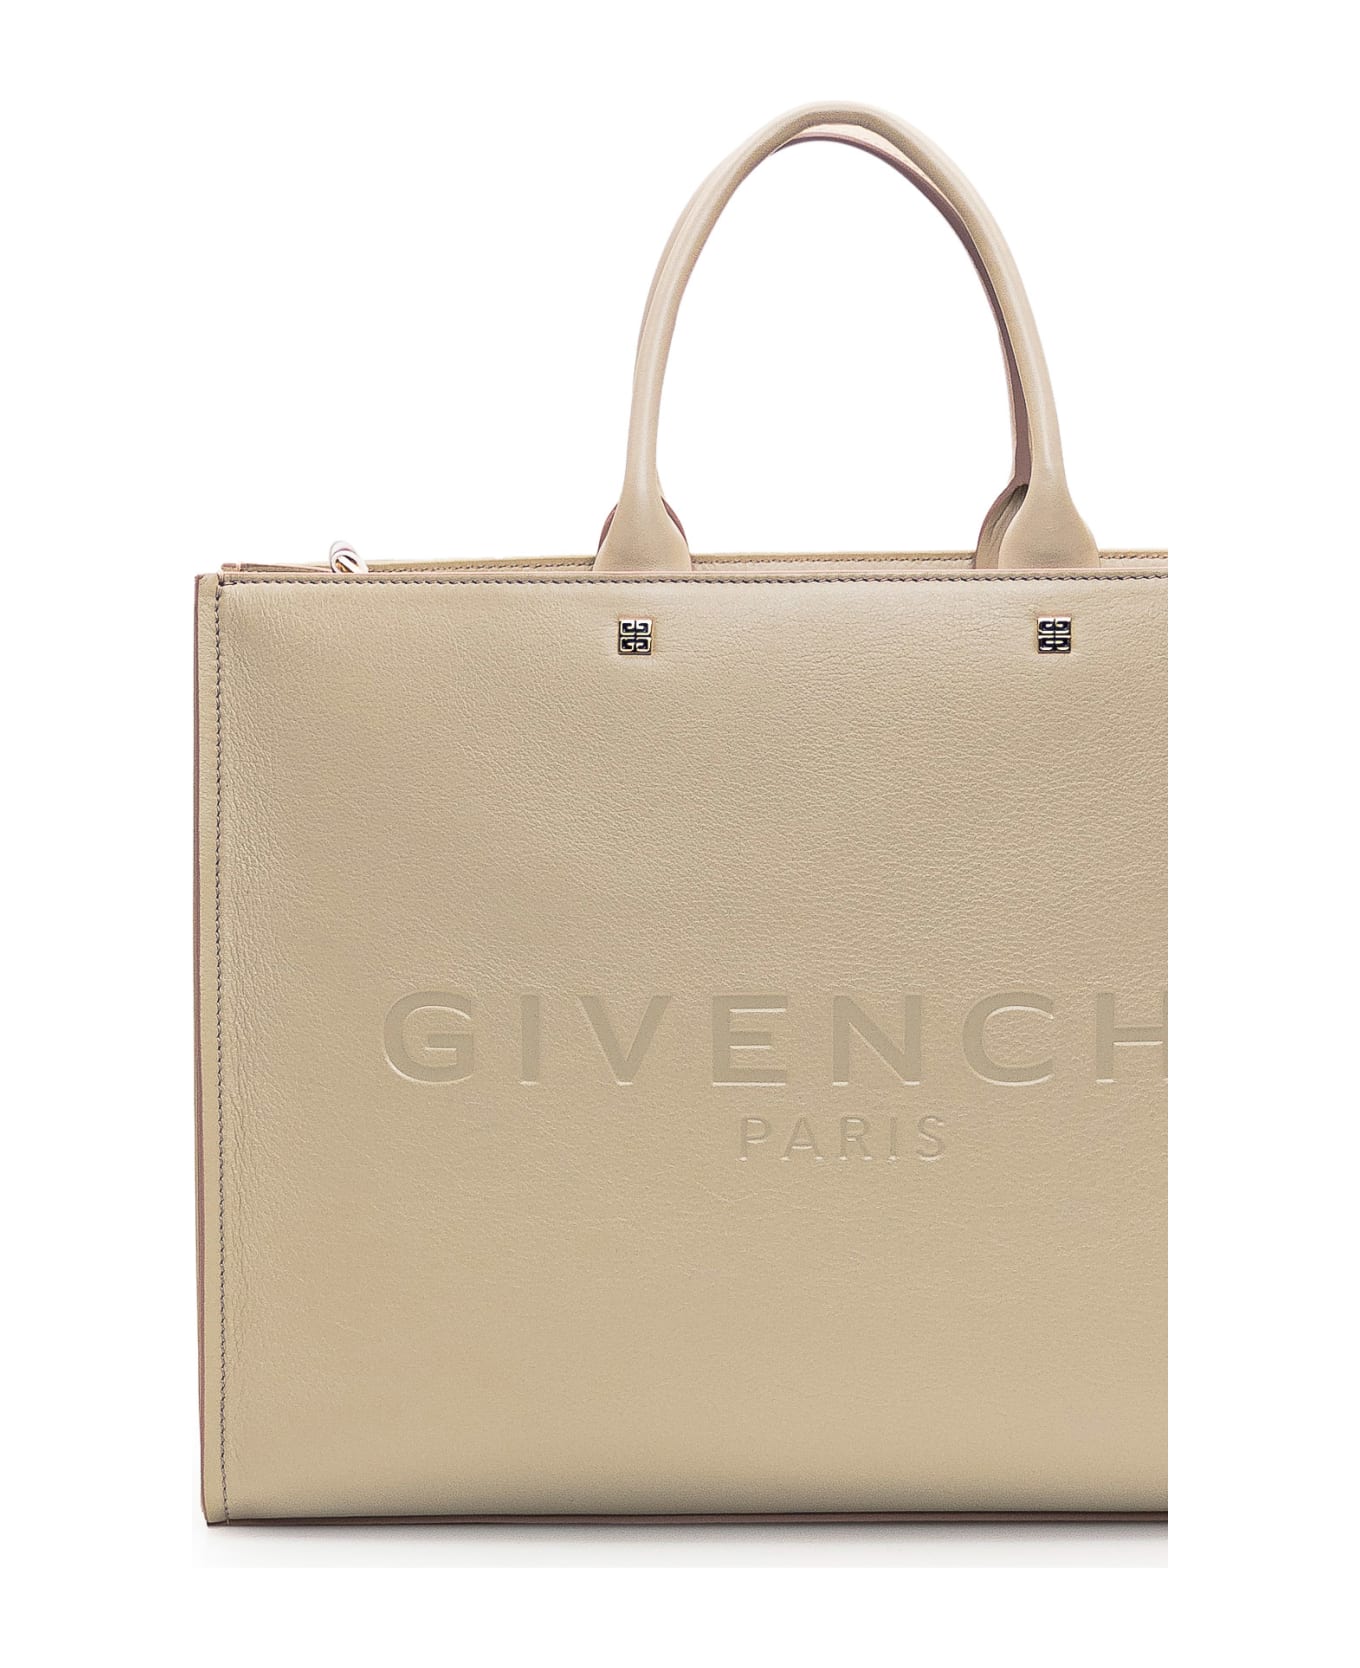 Givenchy G-tote Medium Bag - Beige